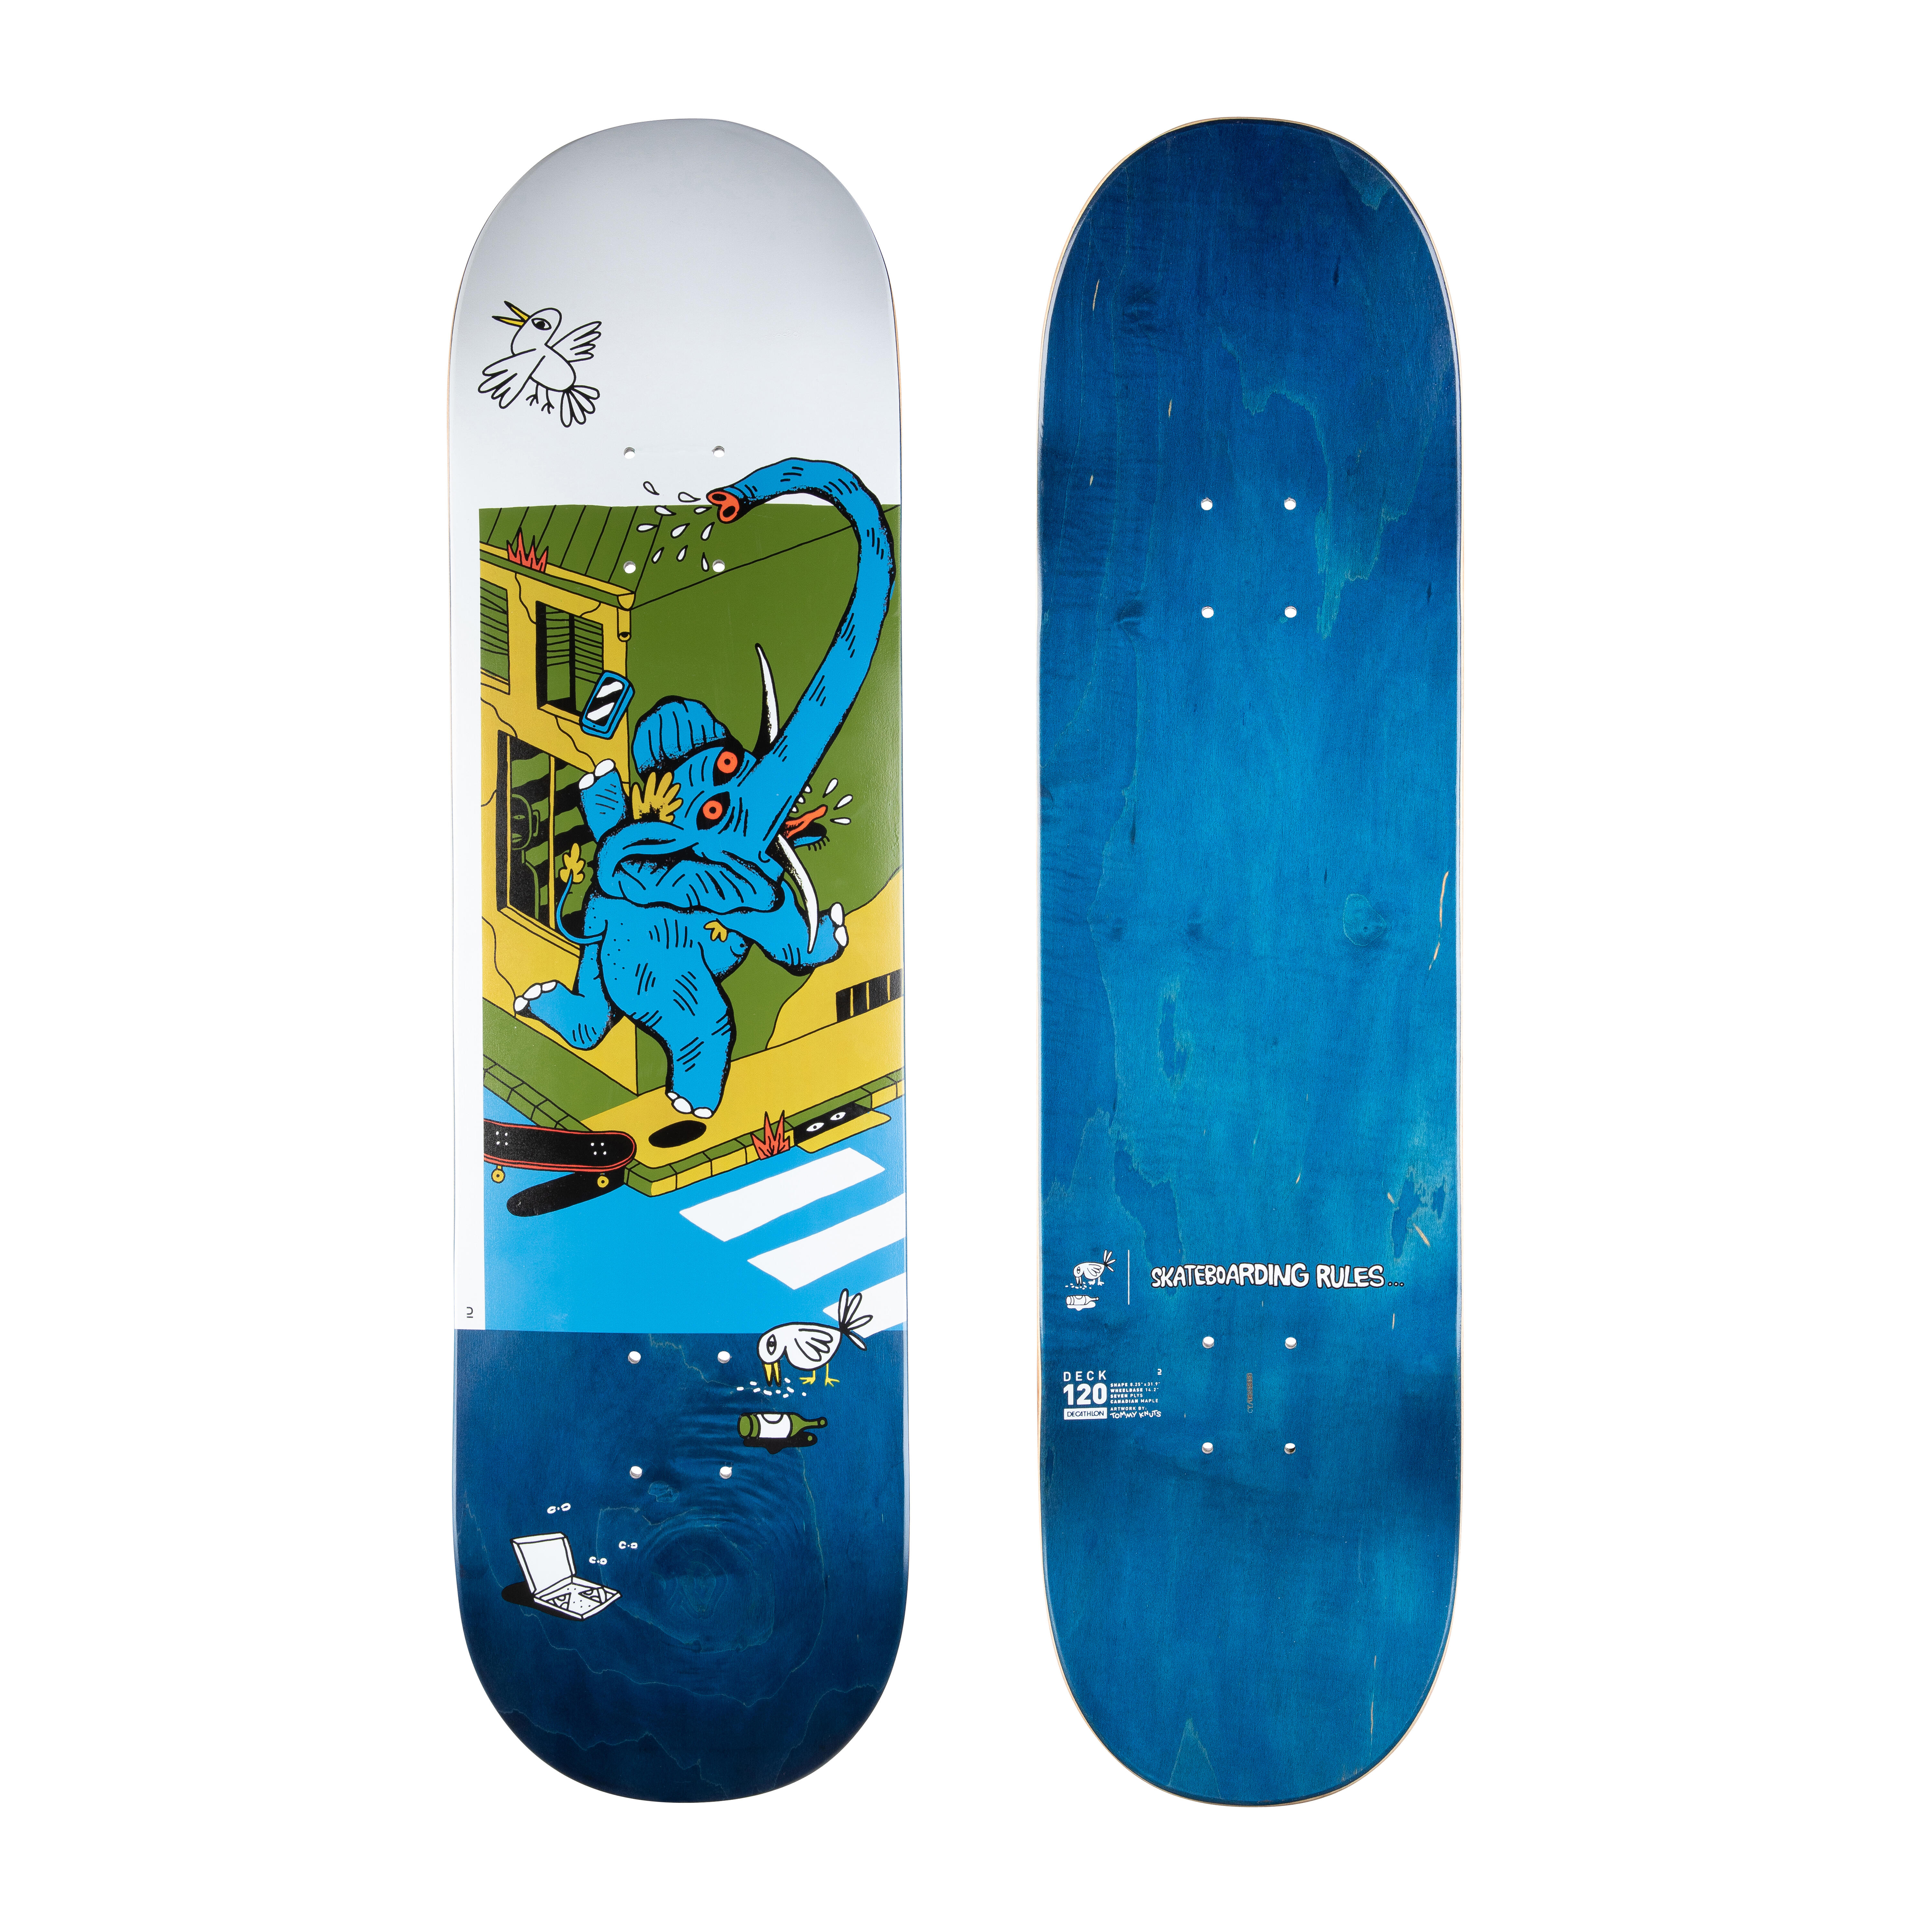 Placă skateboard DK120 KNUTS – SKATEBOARDING RULES 8.25″